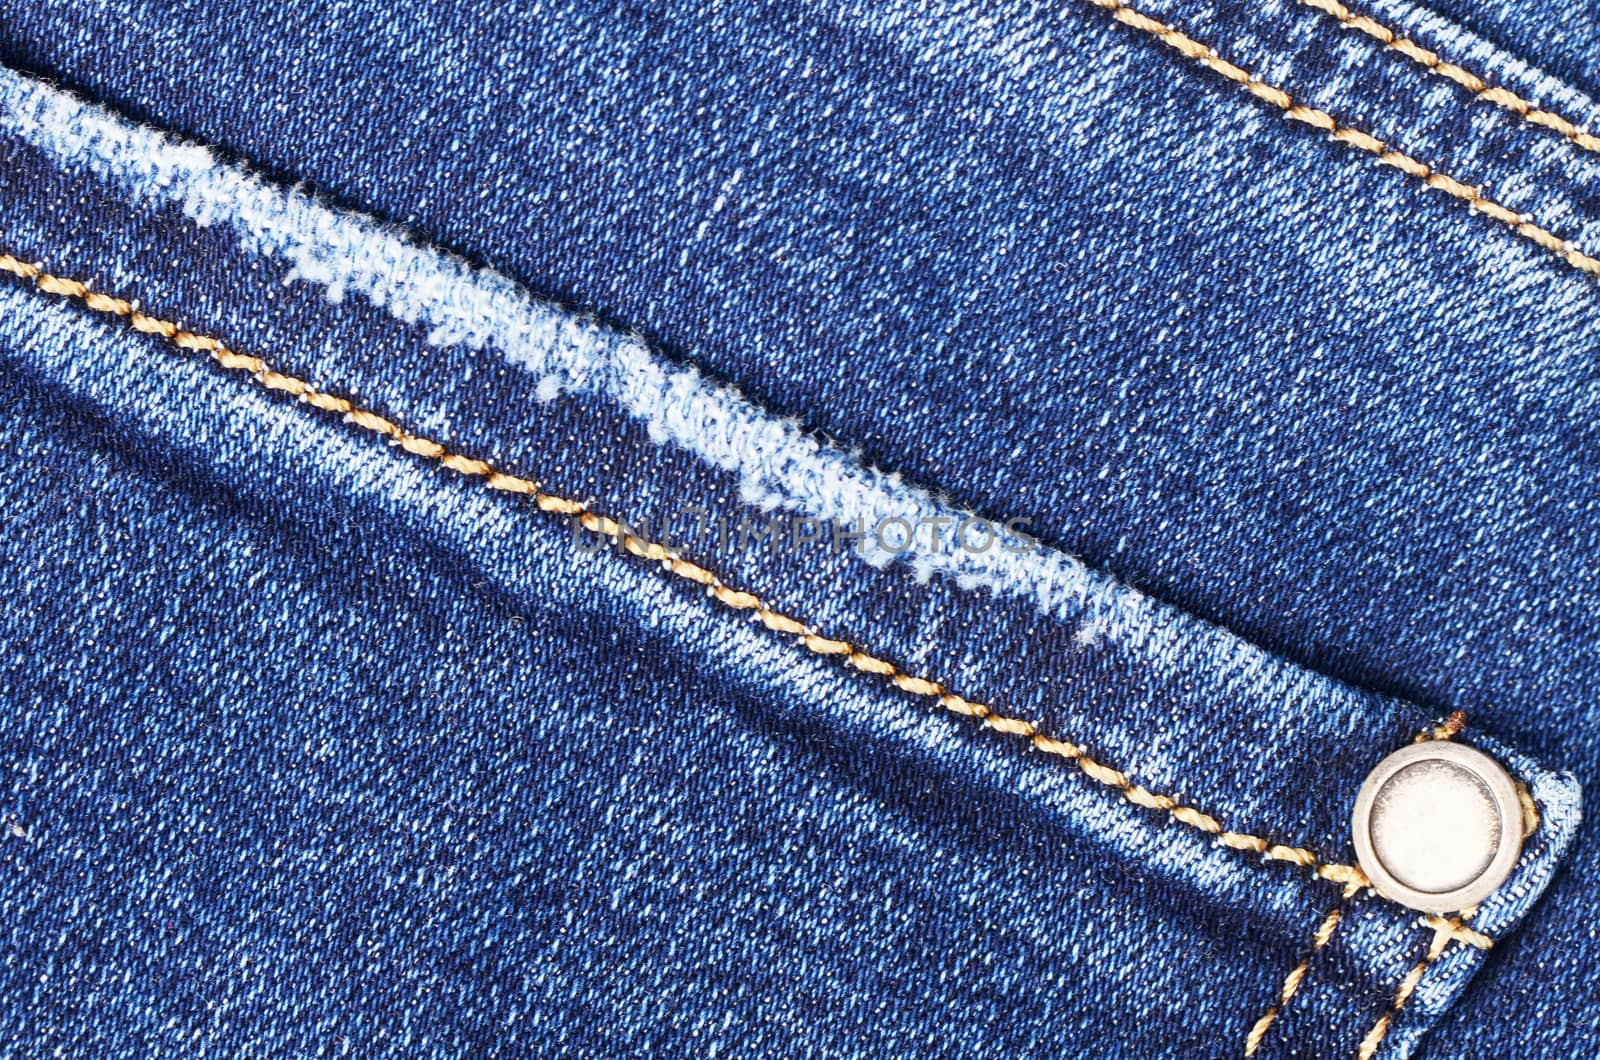 Dark blue female jeans - fabric structure by SvetaVo